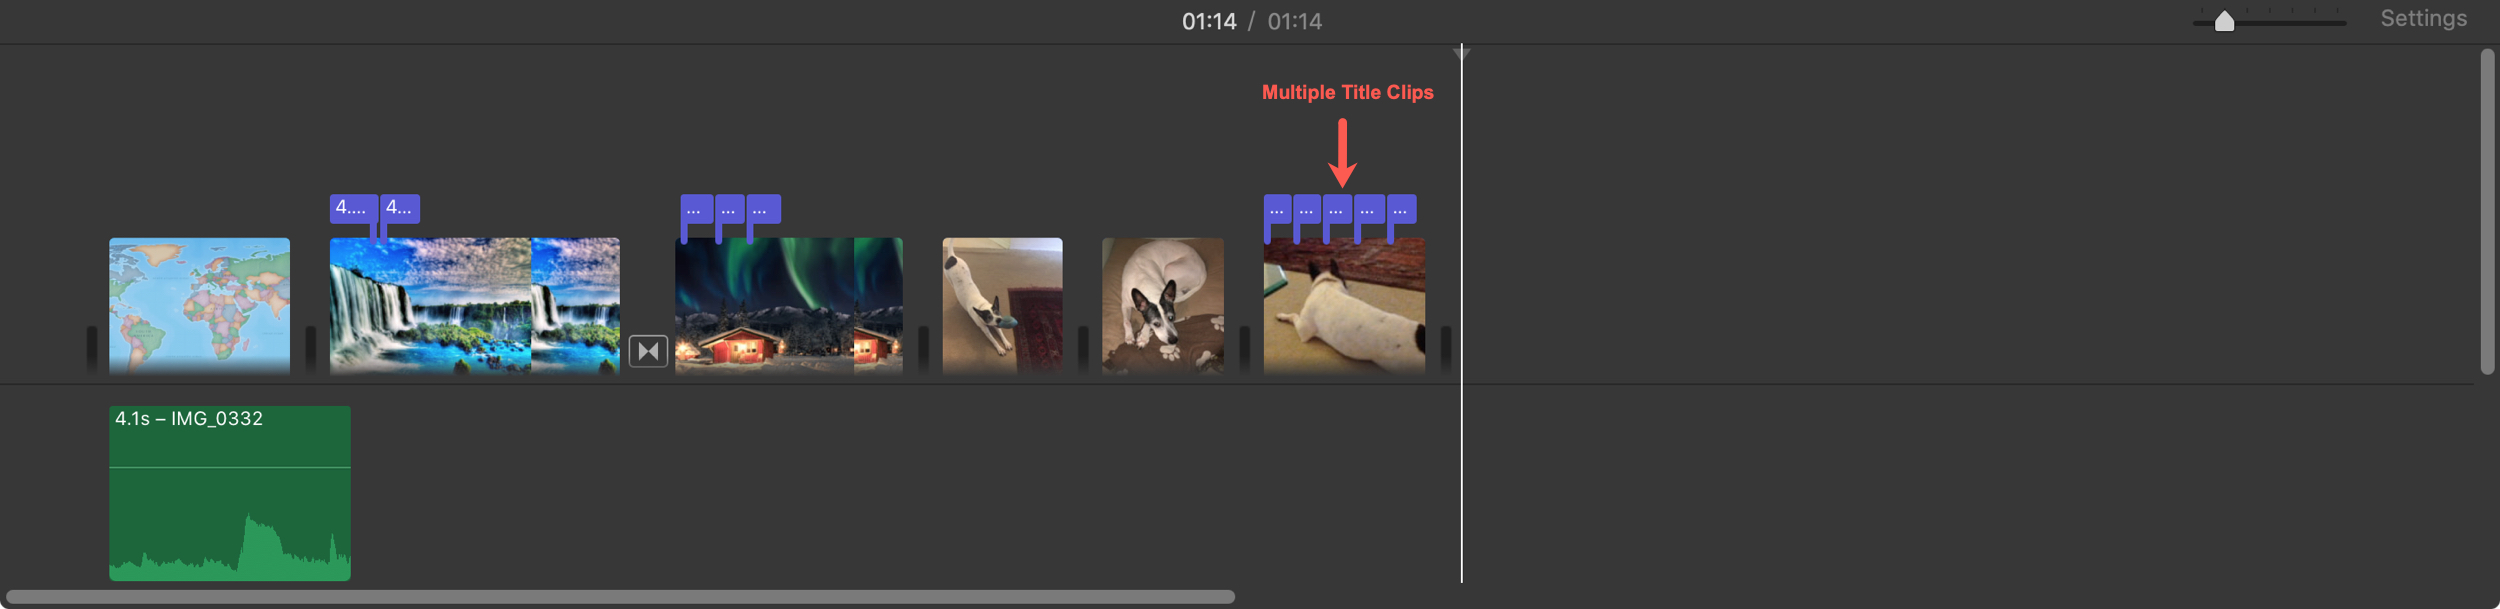 Multiple Title Clips iMovie Mac